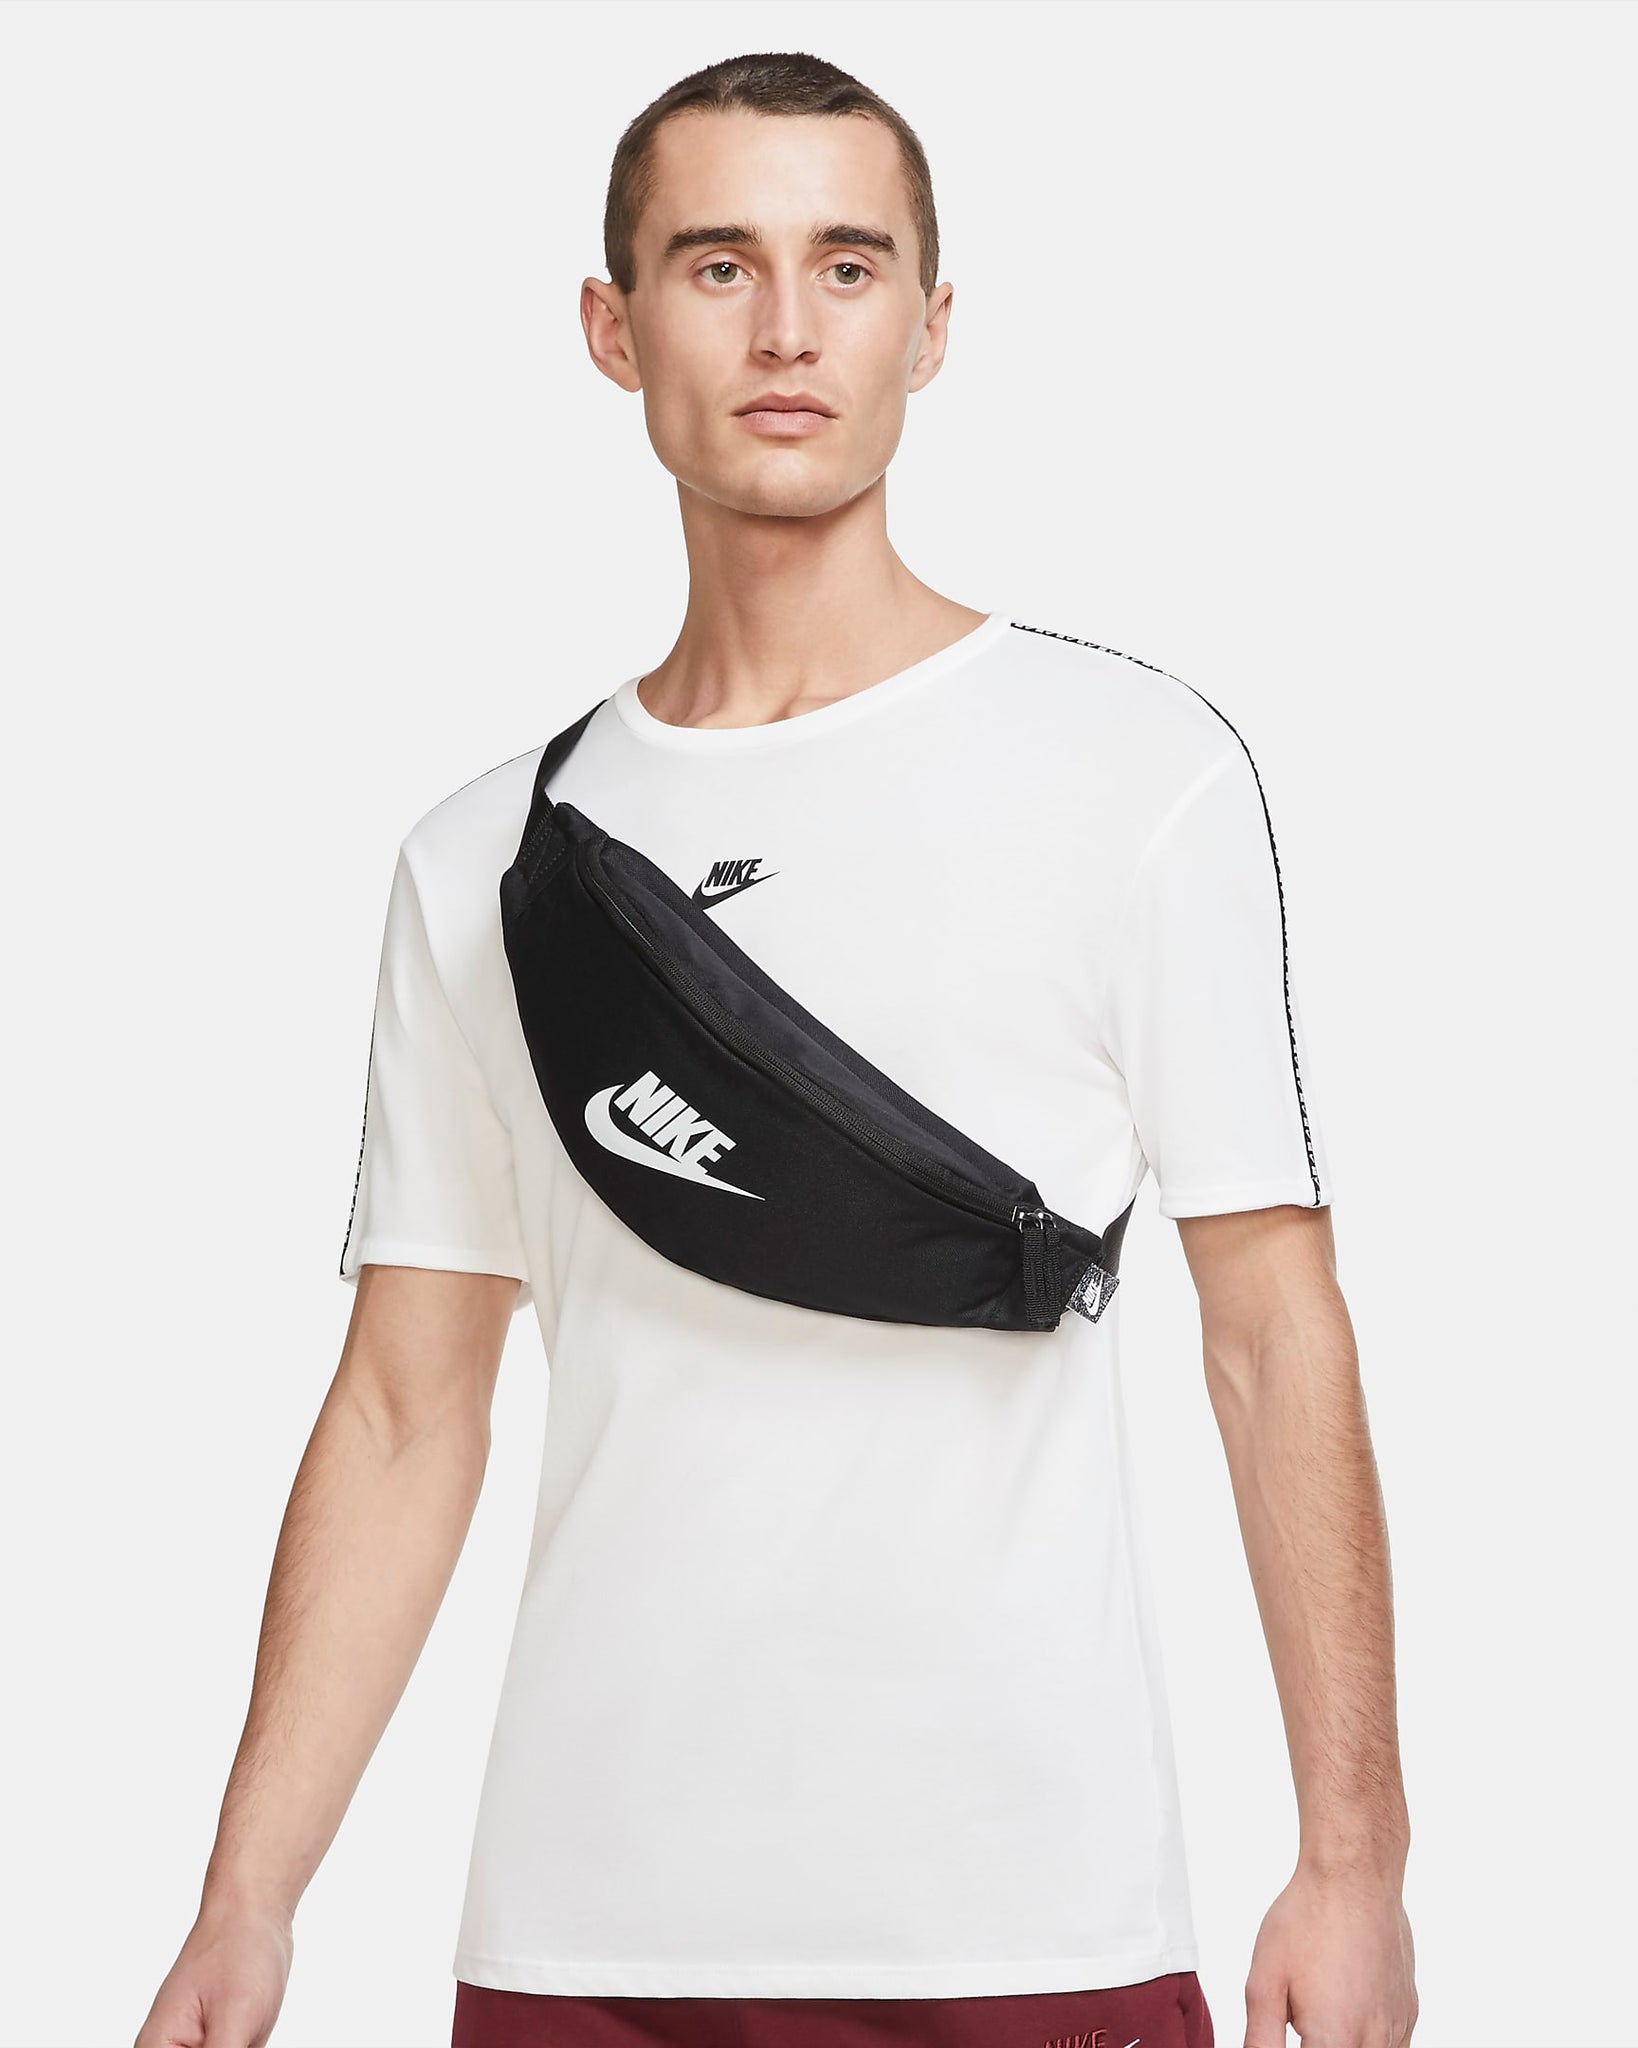 Nike Heritage Waist bag (3 liters)